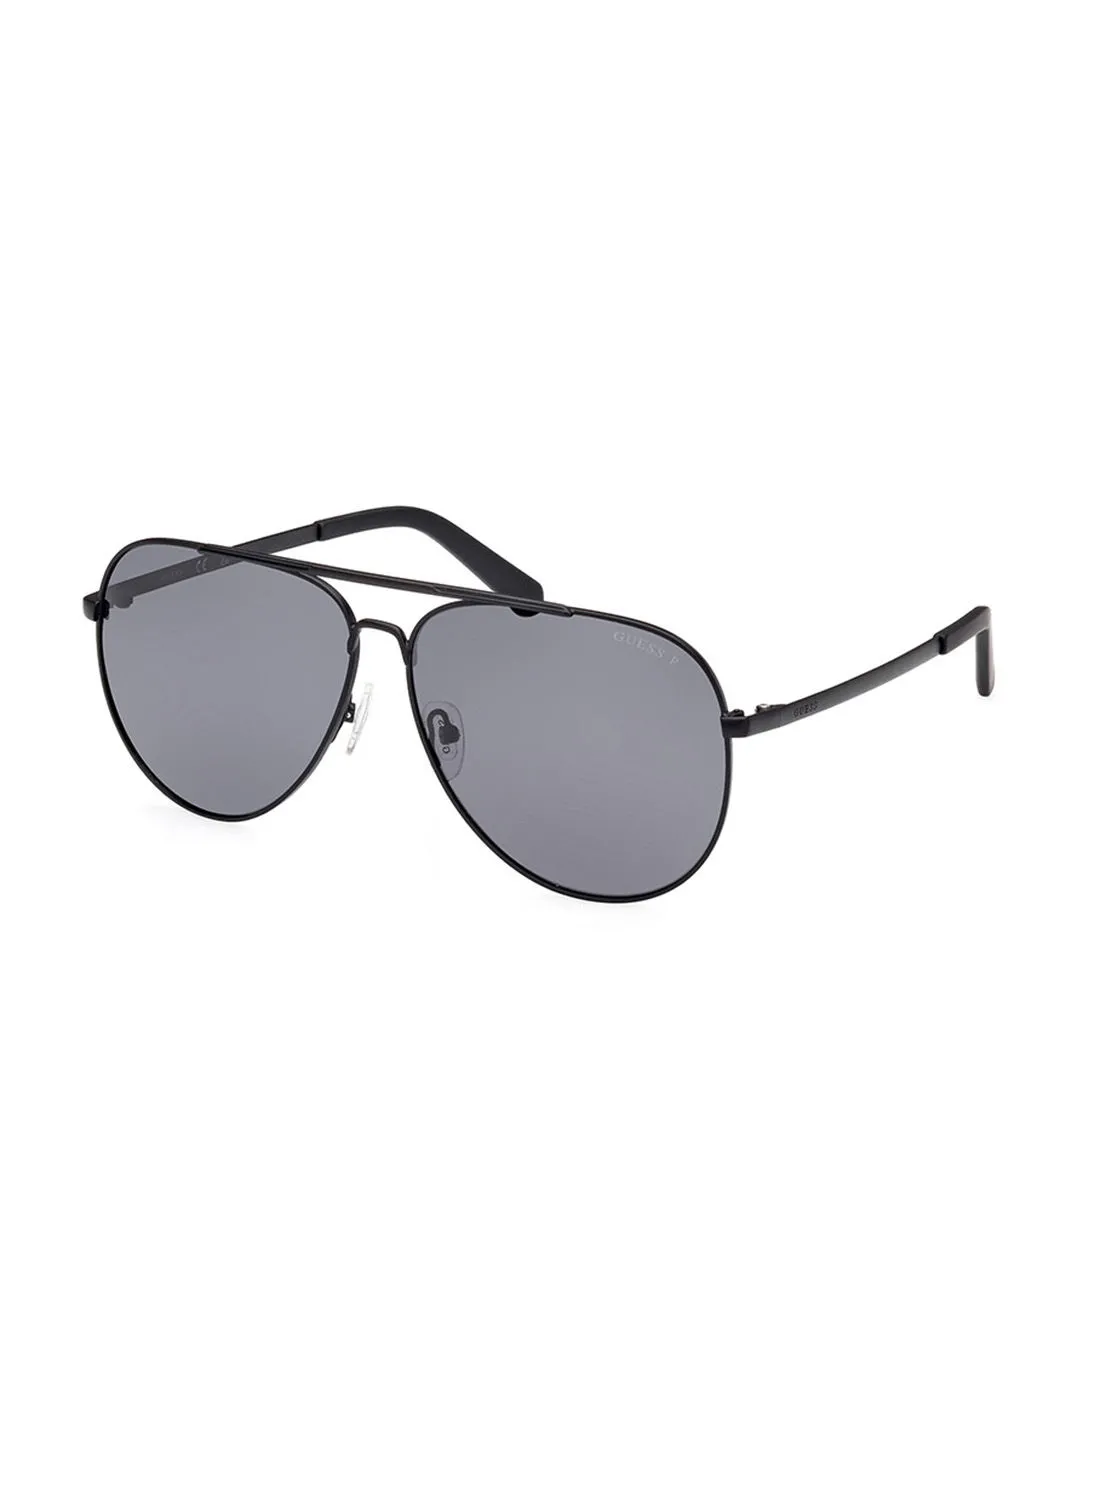 GUESS Sunglasses For Men GU0005902D62